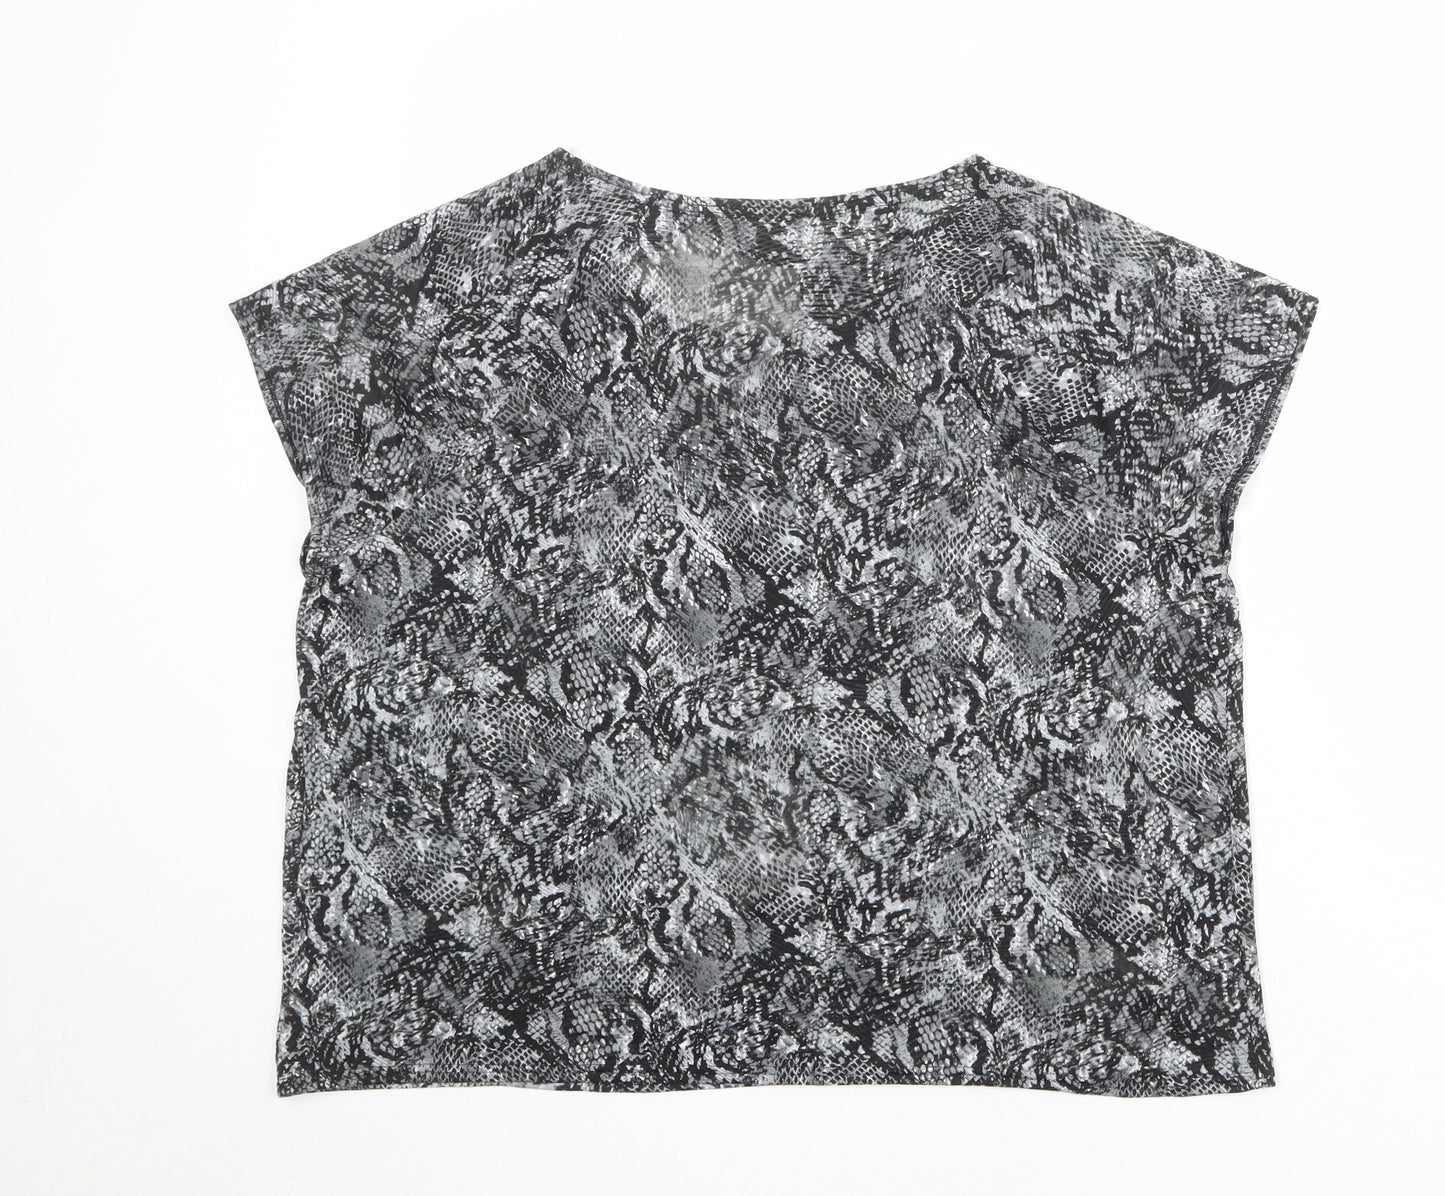 GOODMOVE Womens Multicoloured Animal Print Polyester Basic T-Shirt Size 18 Round Neck Pullover - Snakeskin Pattern